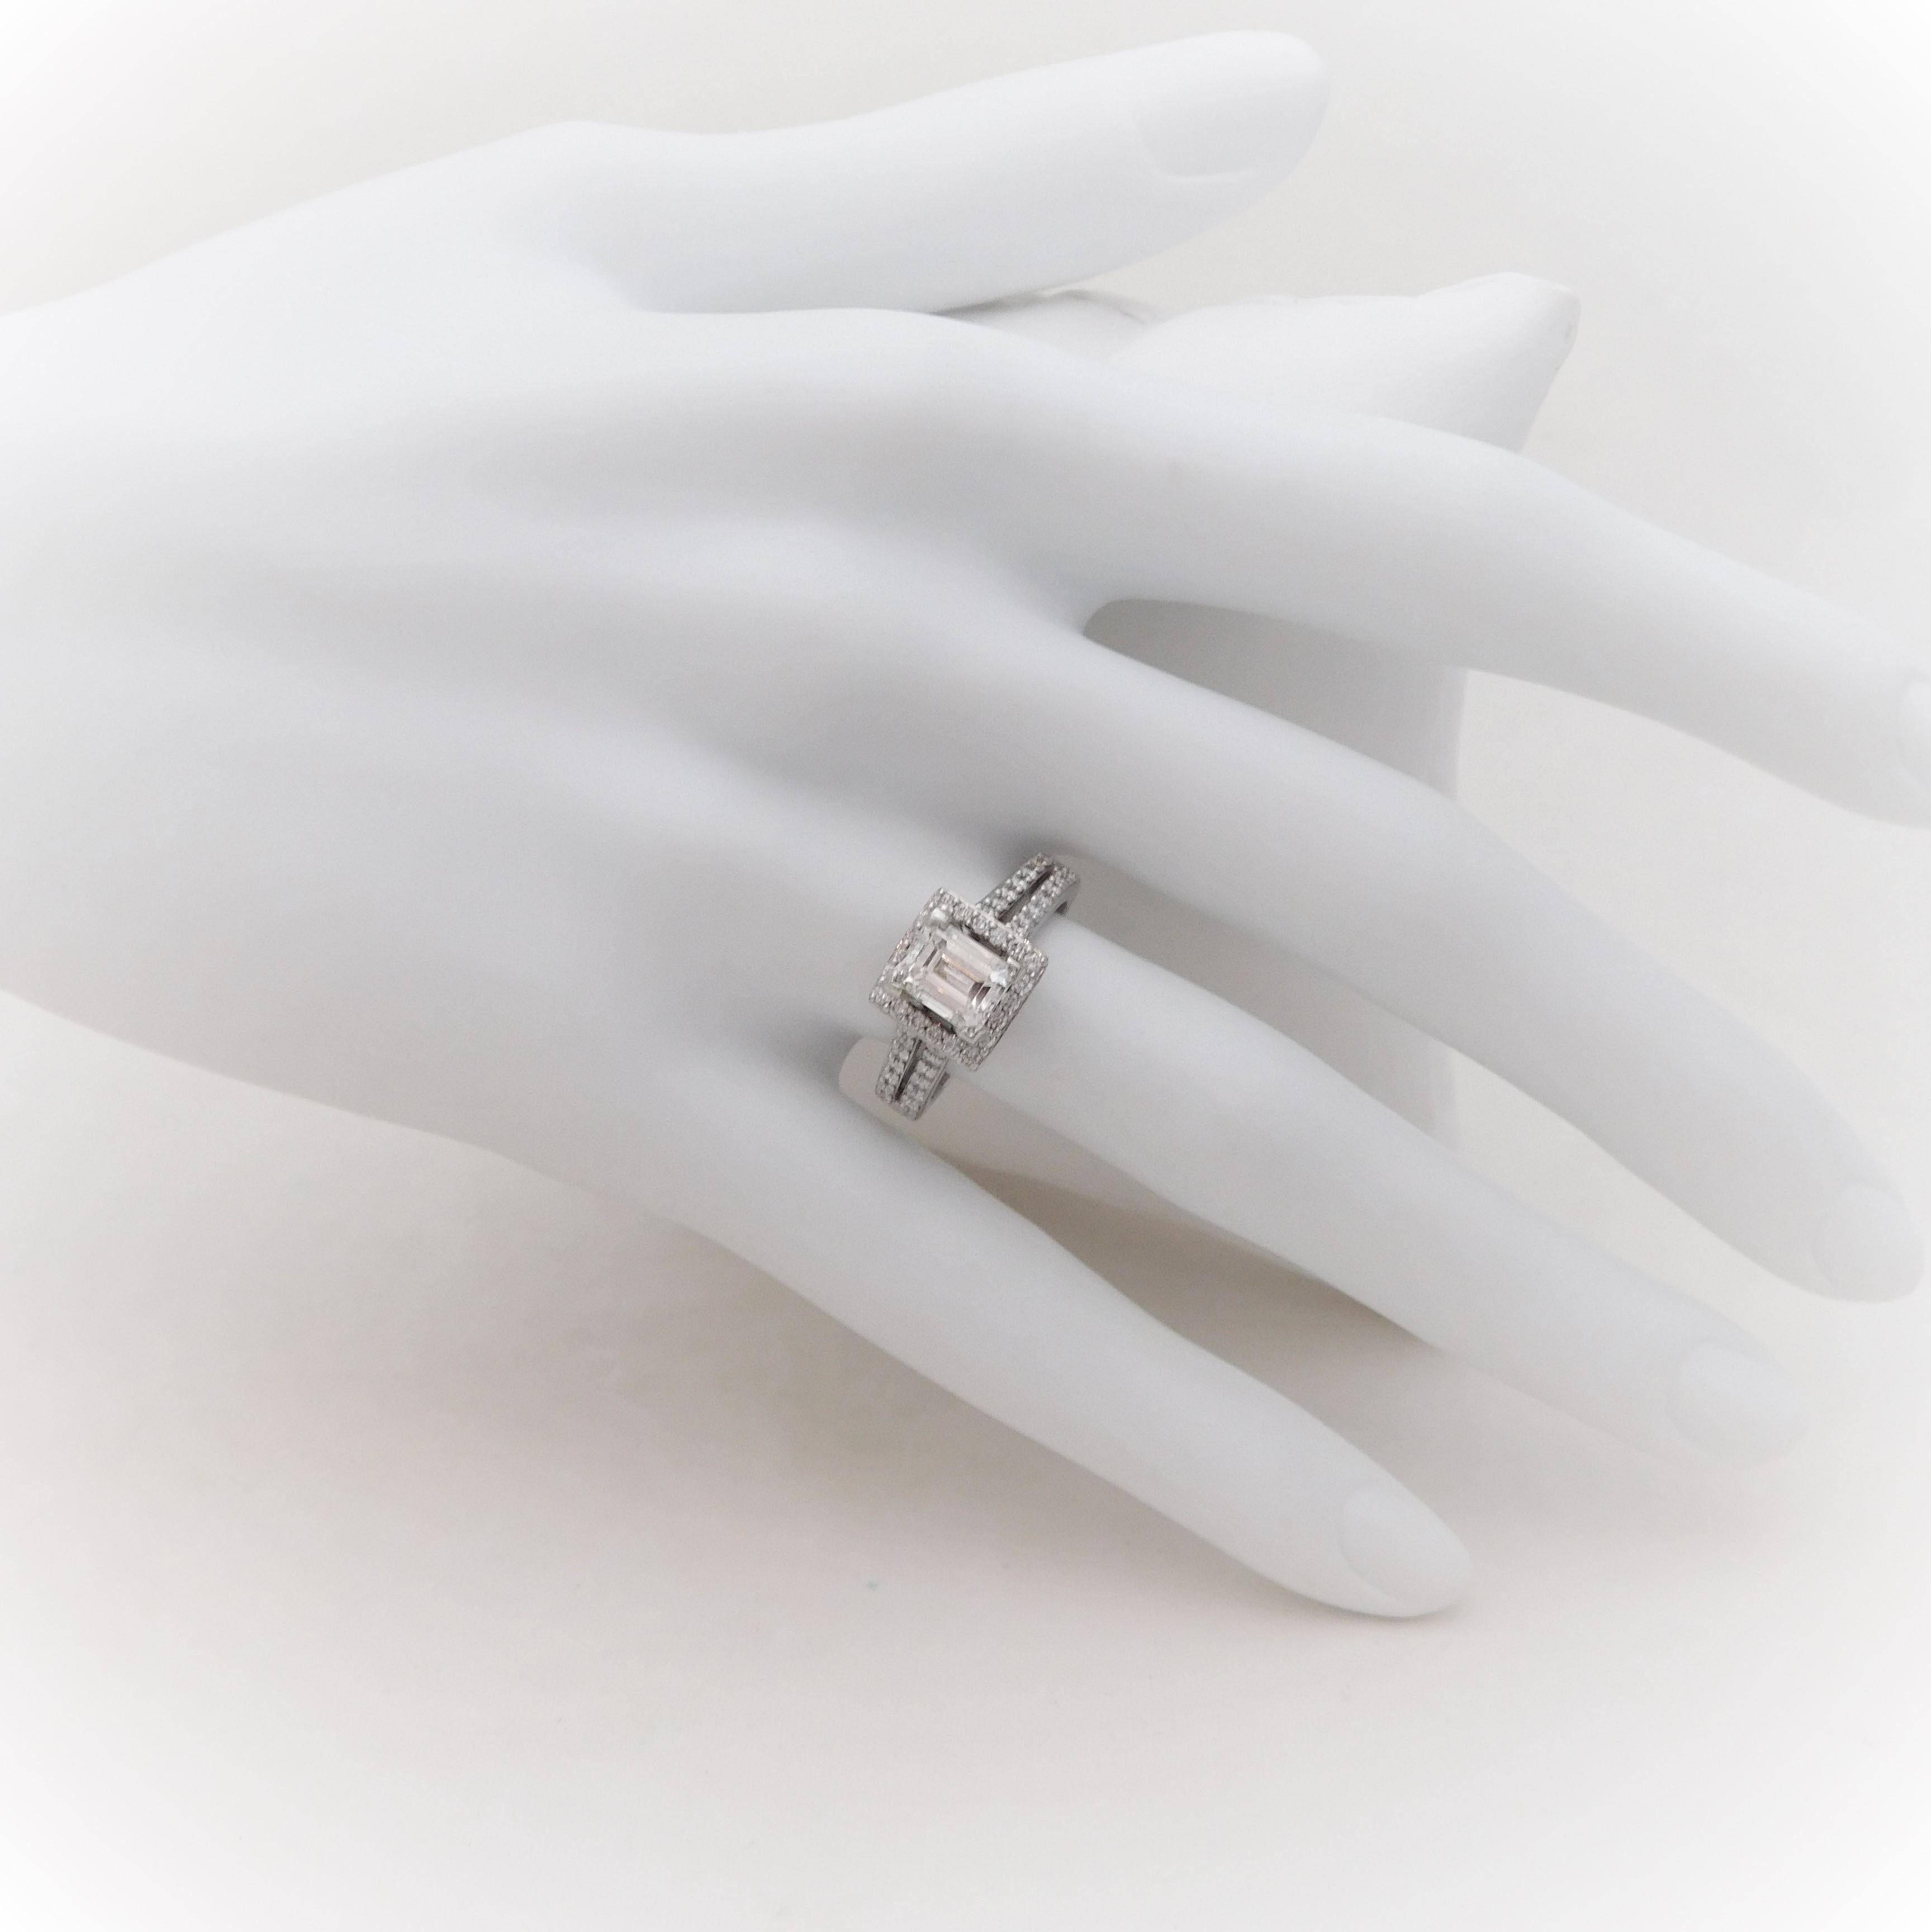 UGS Certified 2.18 Carat Emerald Cut Diamond Engagement Ring 11